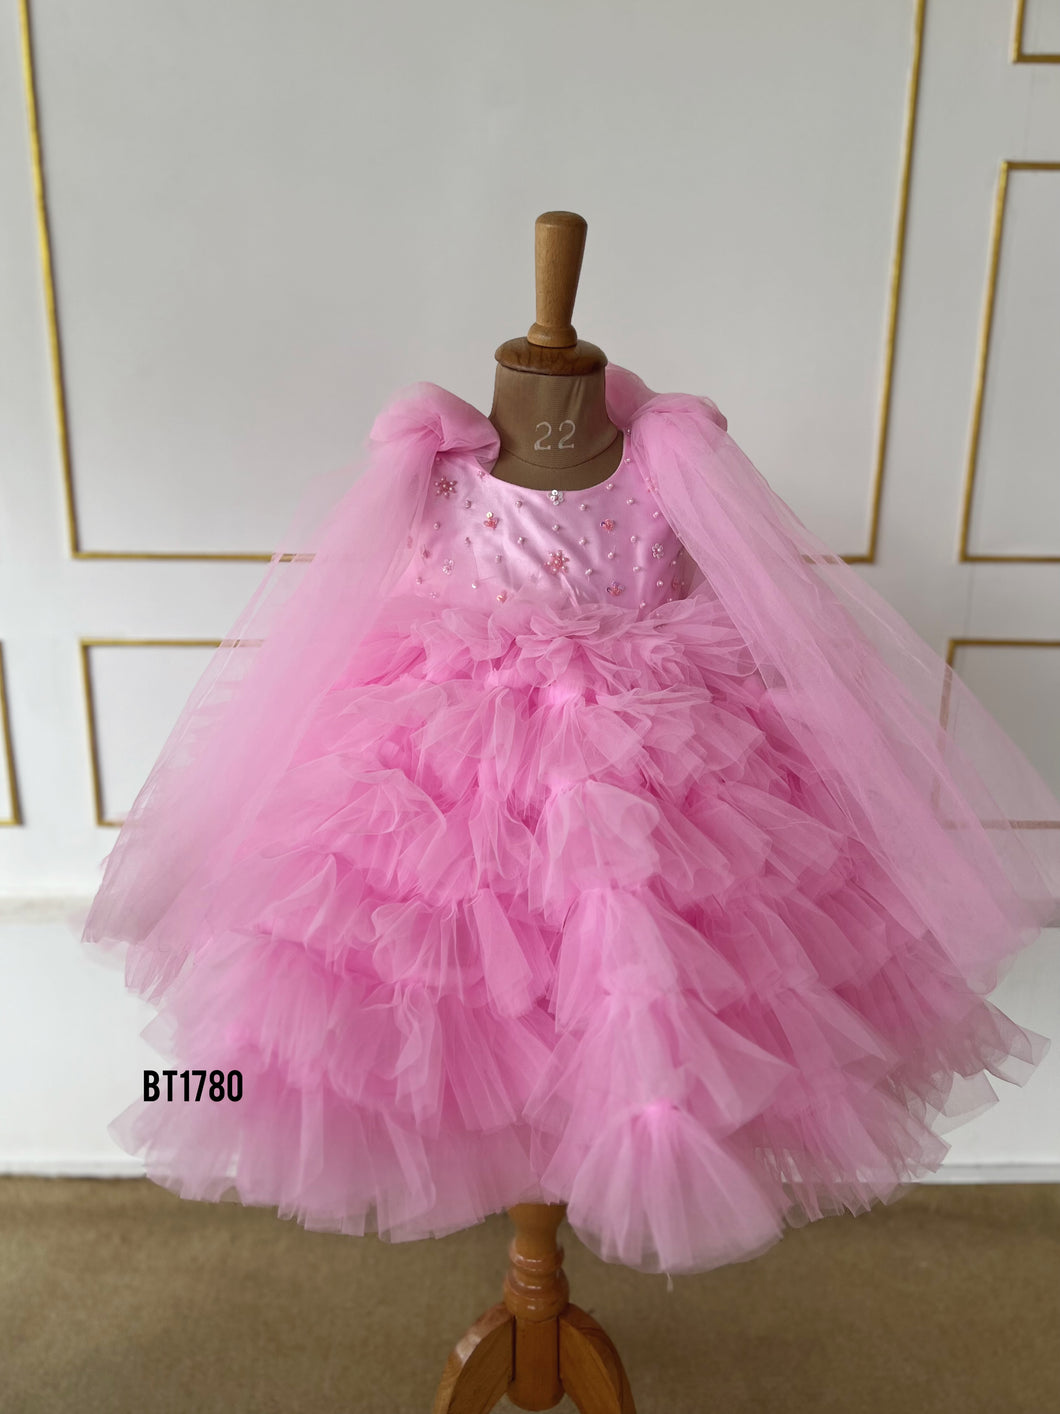 BT1780 Pink Princess Puffball Gown - Every Little Dreamer's Delight